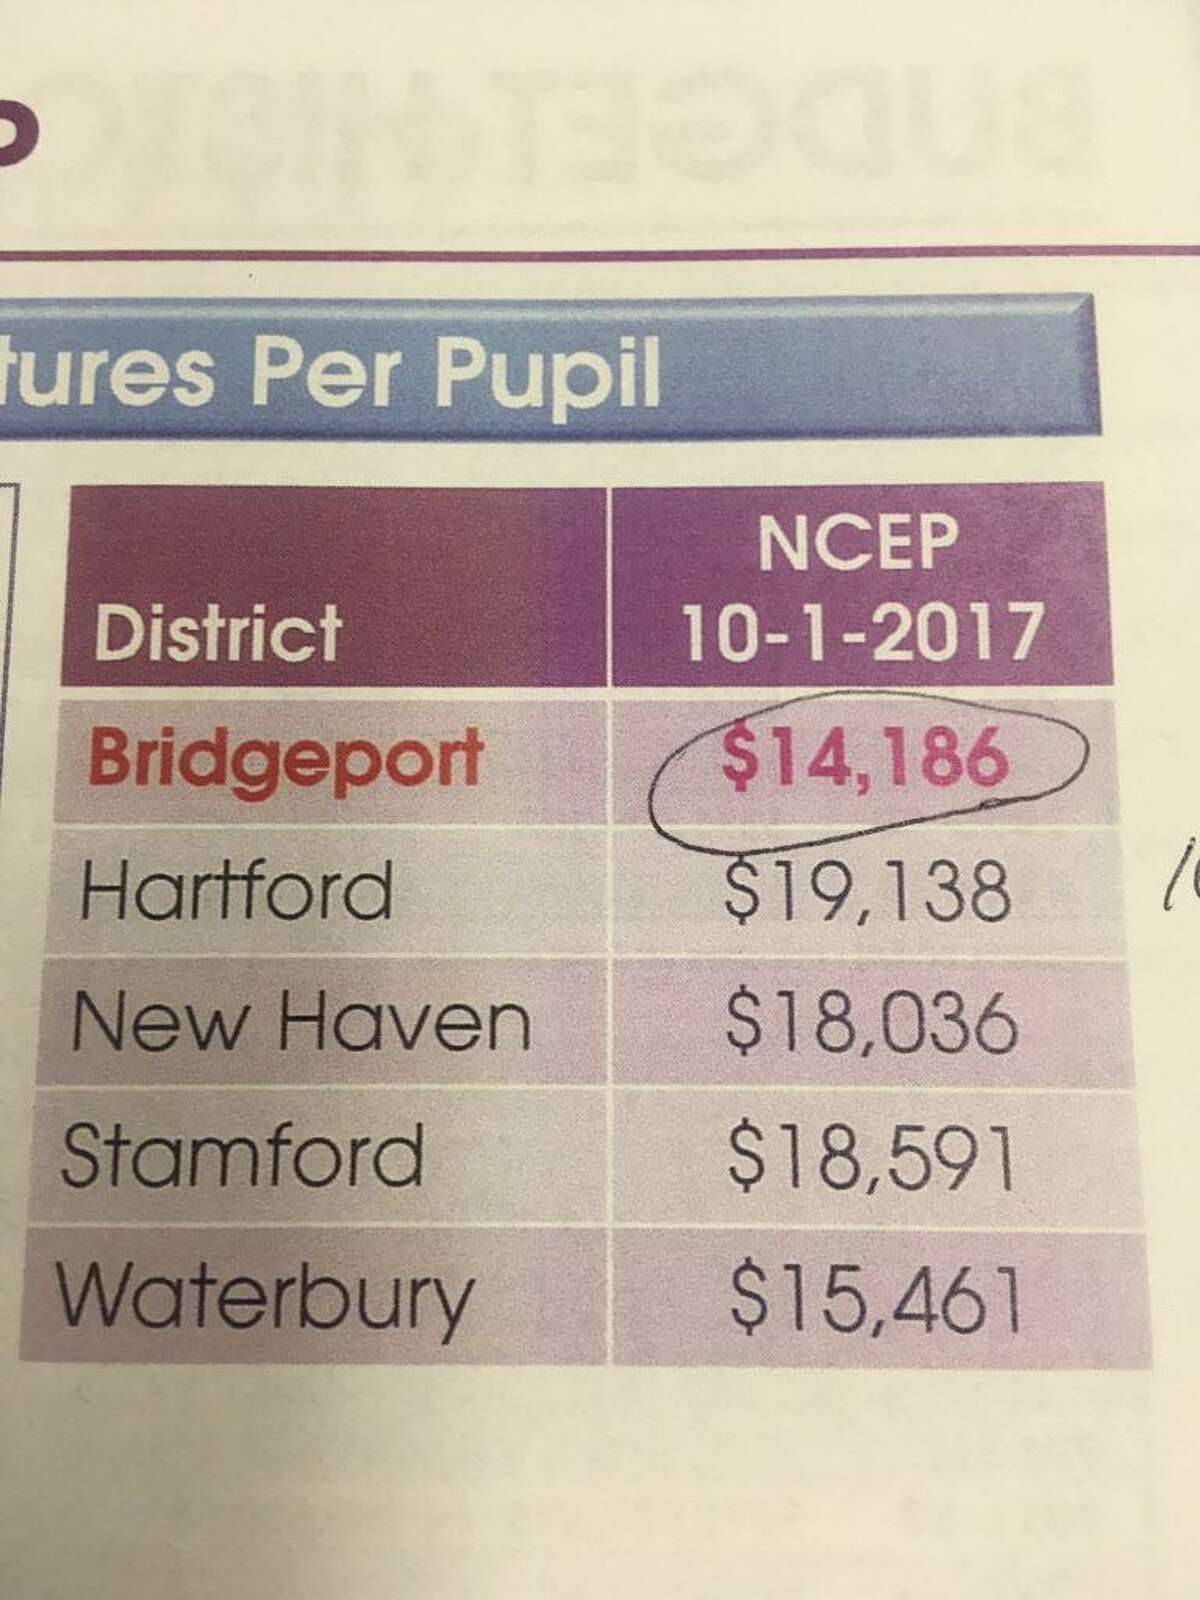 Bridgeport BOE finance committee gets budget documents that shows district per pupil comparison